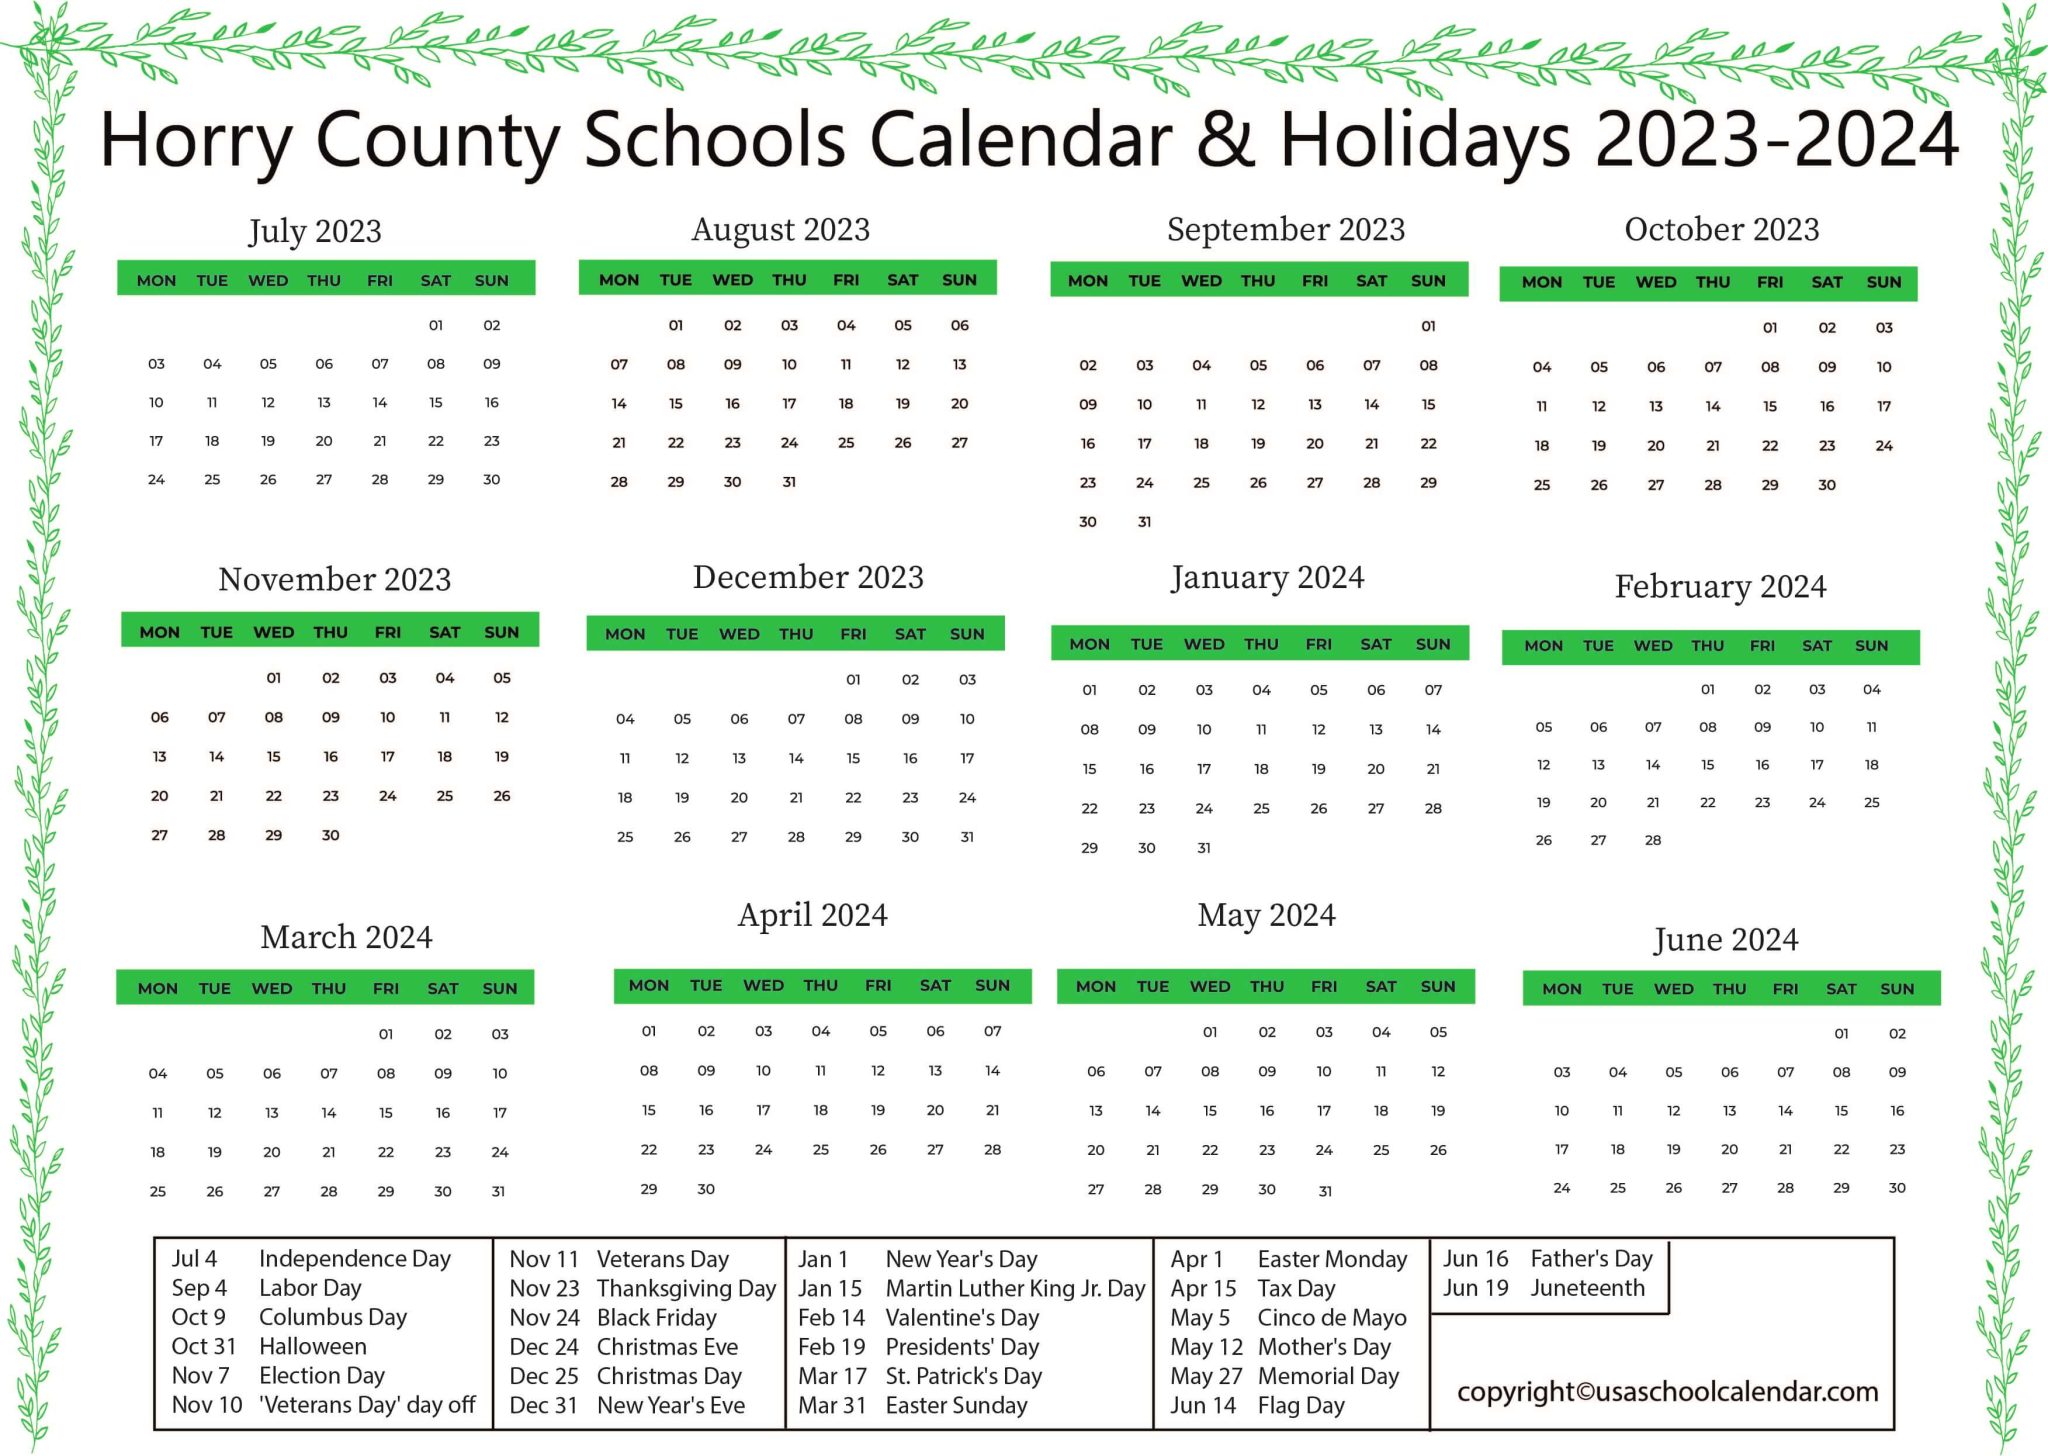 Horry County School Calendar 2024-2025 - susan kirbee